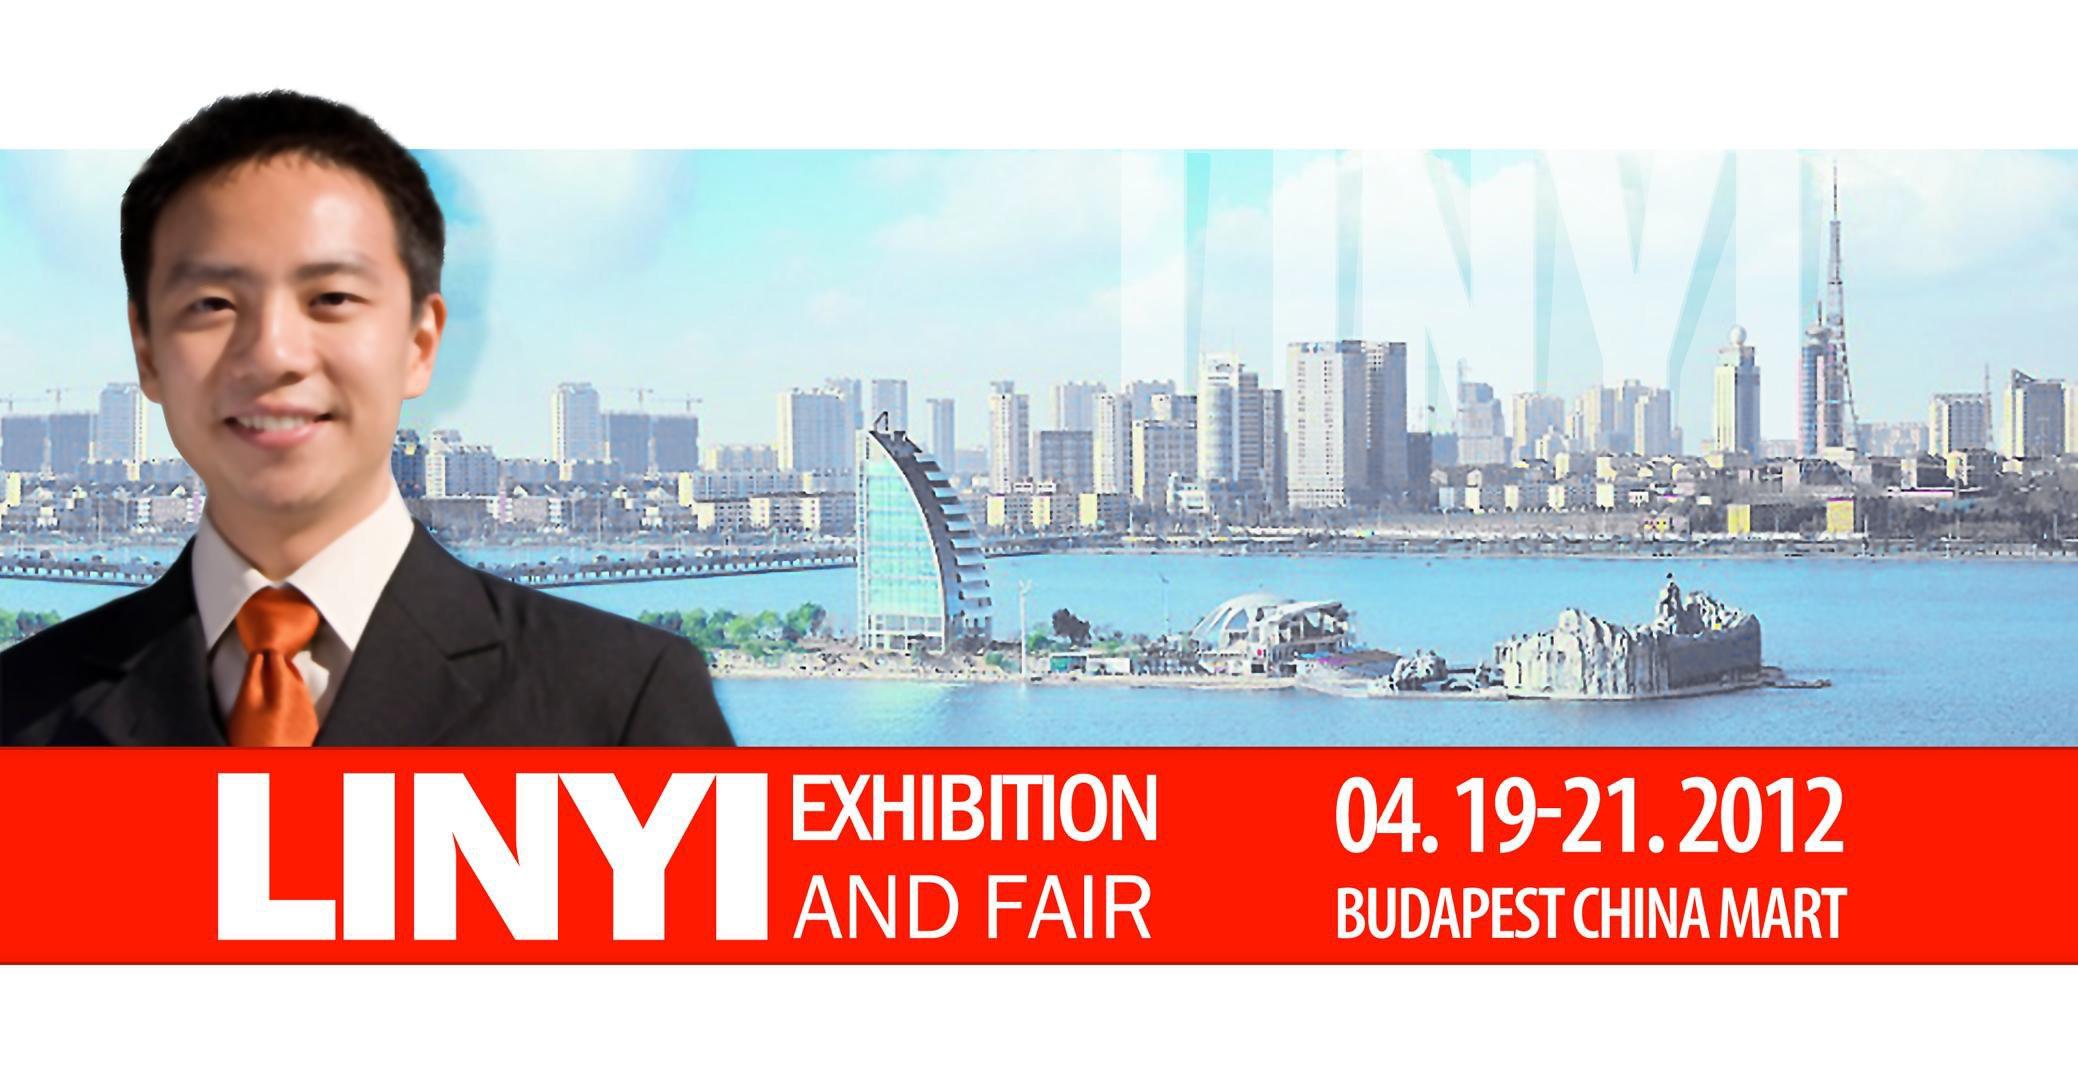 LinYi Exhibition & Fair, Budapest China Mart, 19 - 21 April